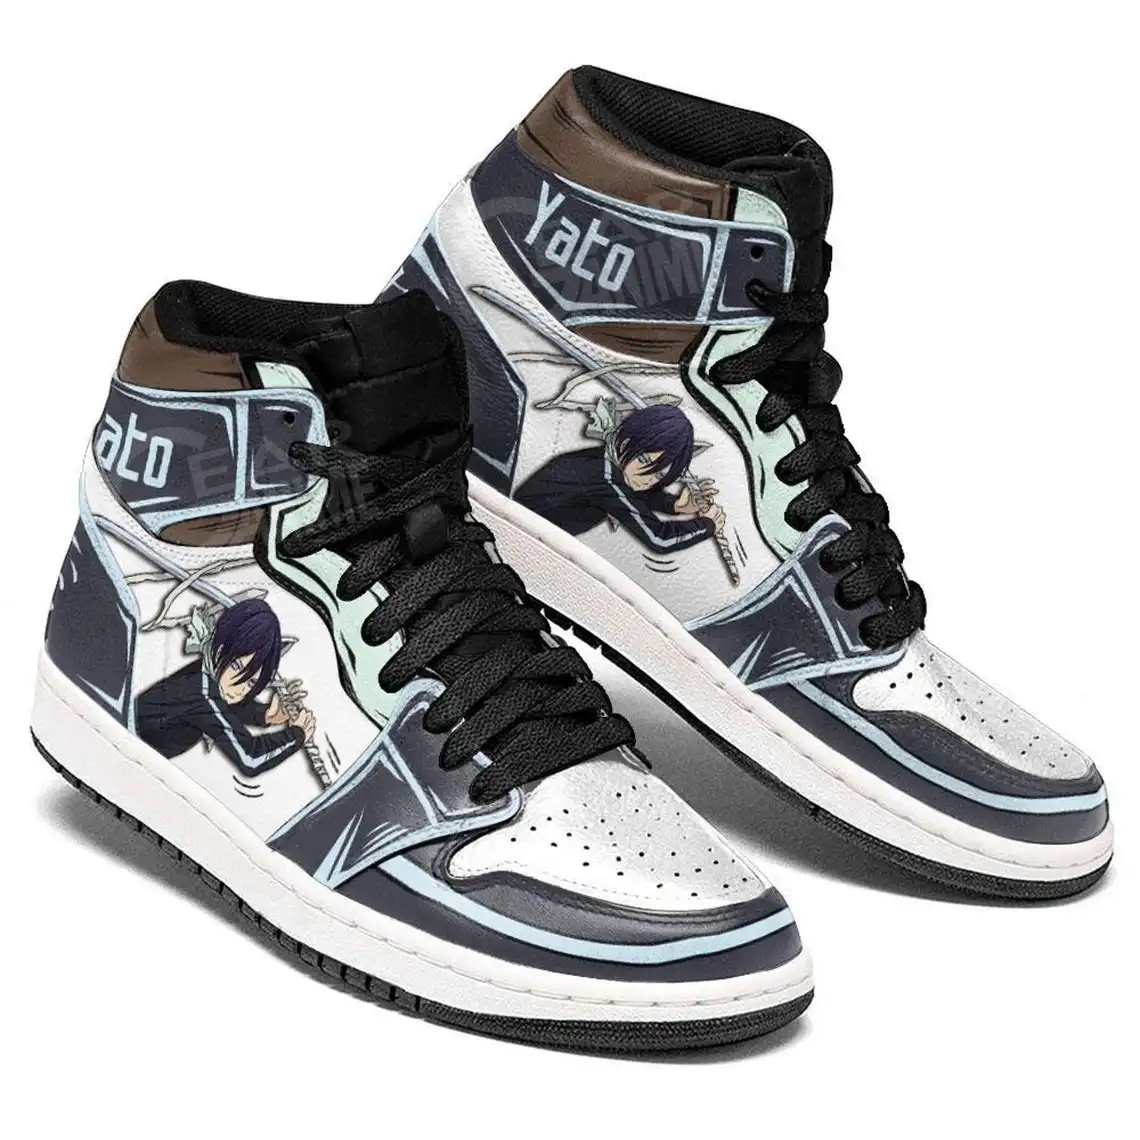 Noragami Yato For Anime Fans - Custom Anime Sneaker For Men And Women Air Jordan Shoes